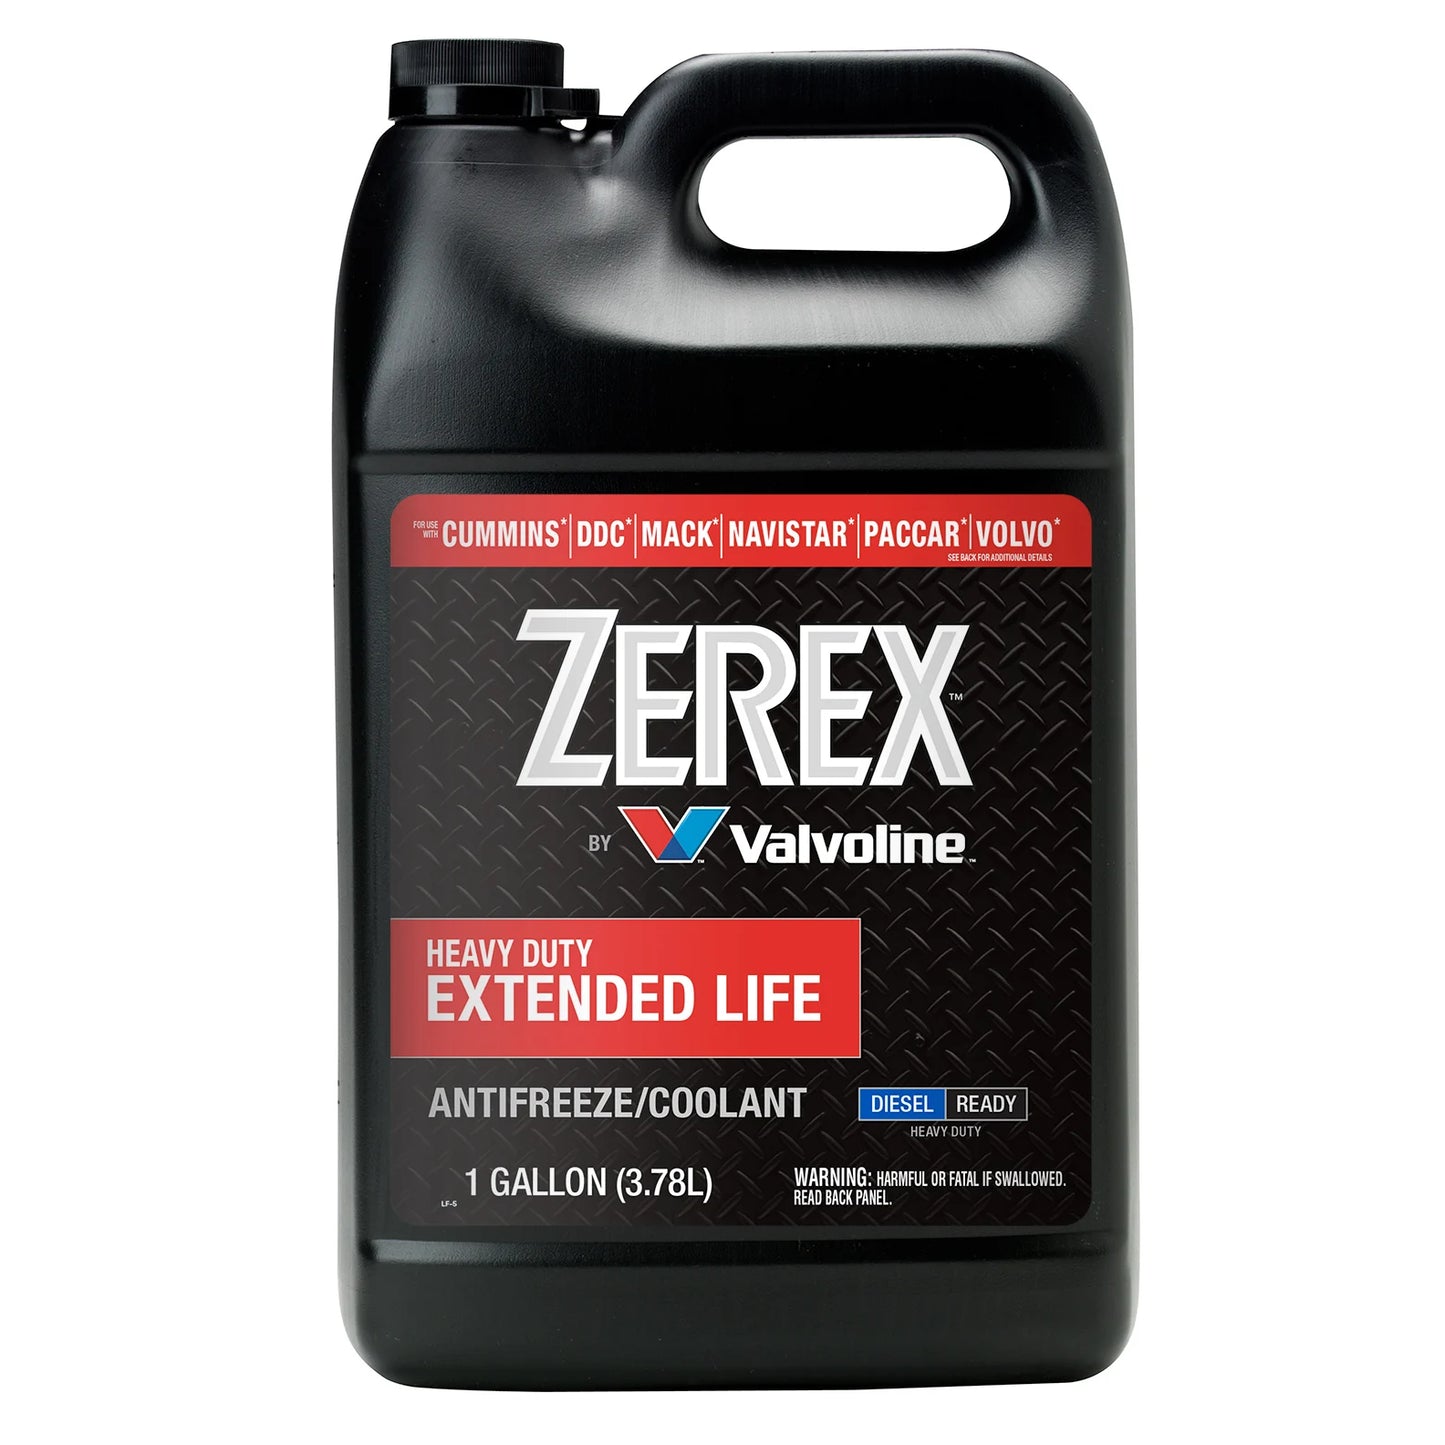 Zerex Heavy Duty Extended Life Anitfreeze/Coolant (55 Gal)